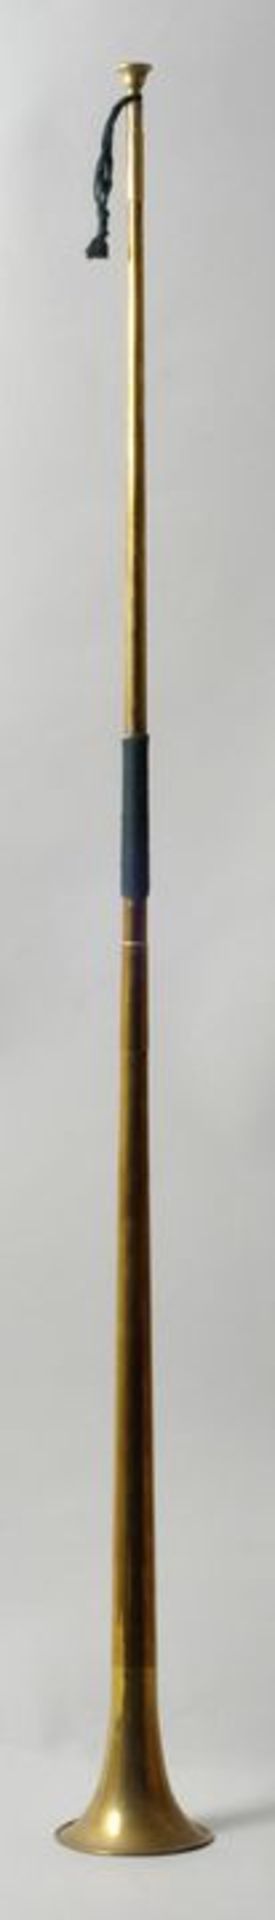 Geradtrompete (Naturtrompete), Ende 19./ 20. Jh.Messing, im Schalltrichter kl. Delle, L. 127,5 cm- -